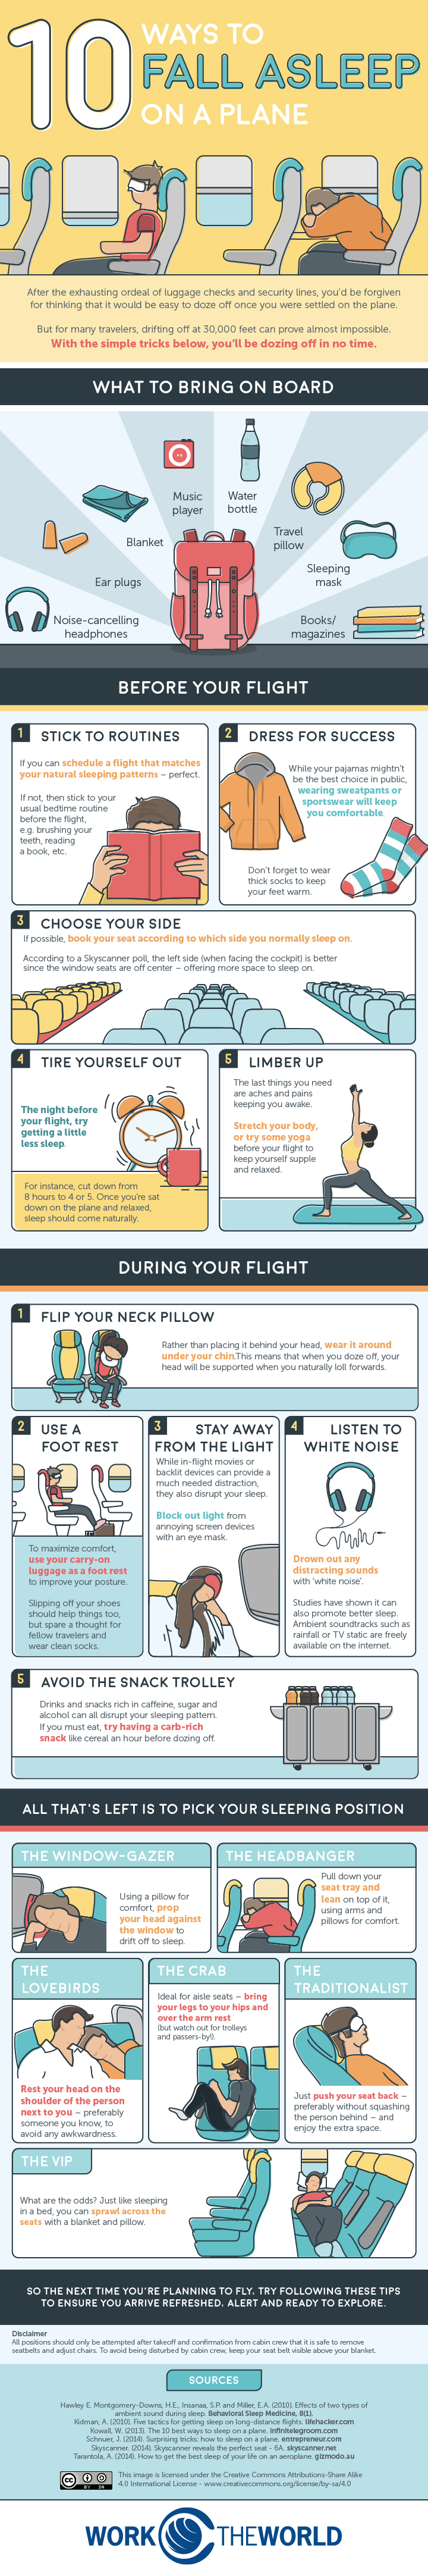 10 Ways to Fall Asleep on a Plane